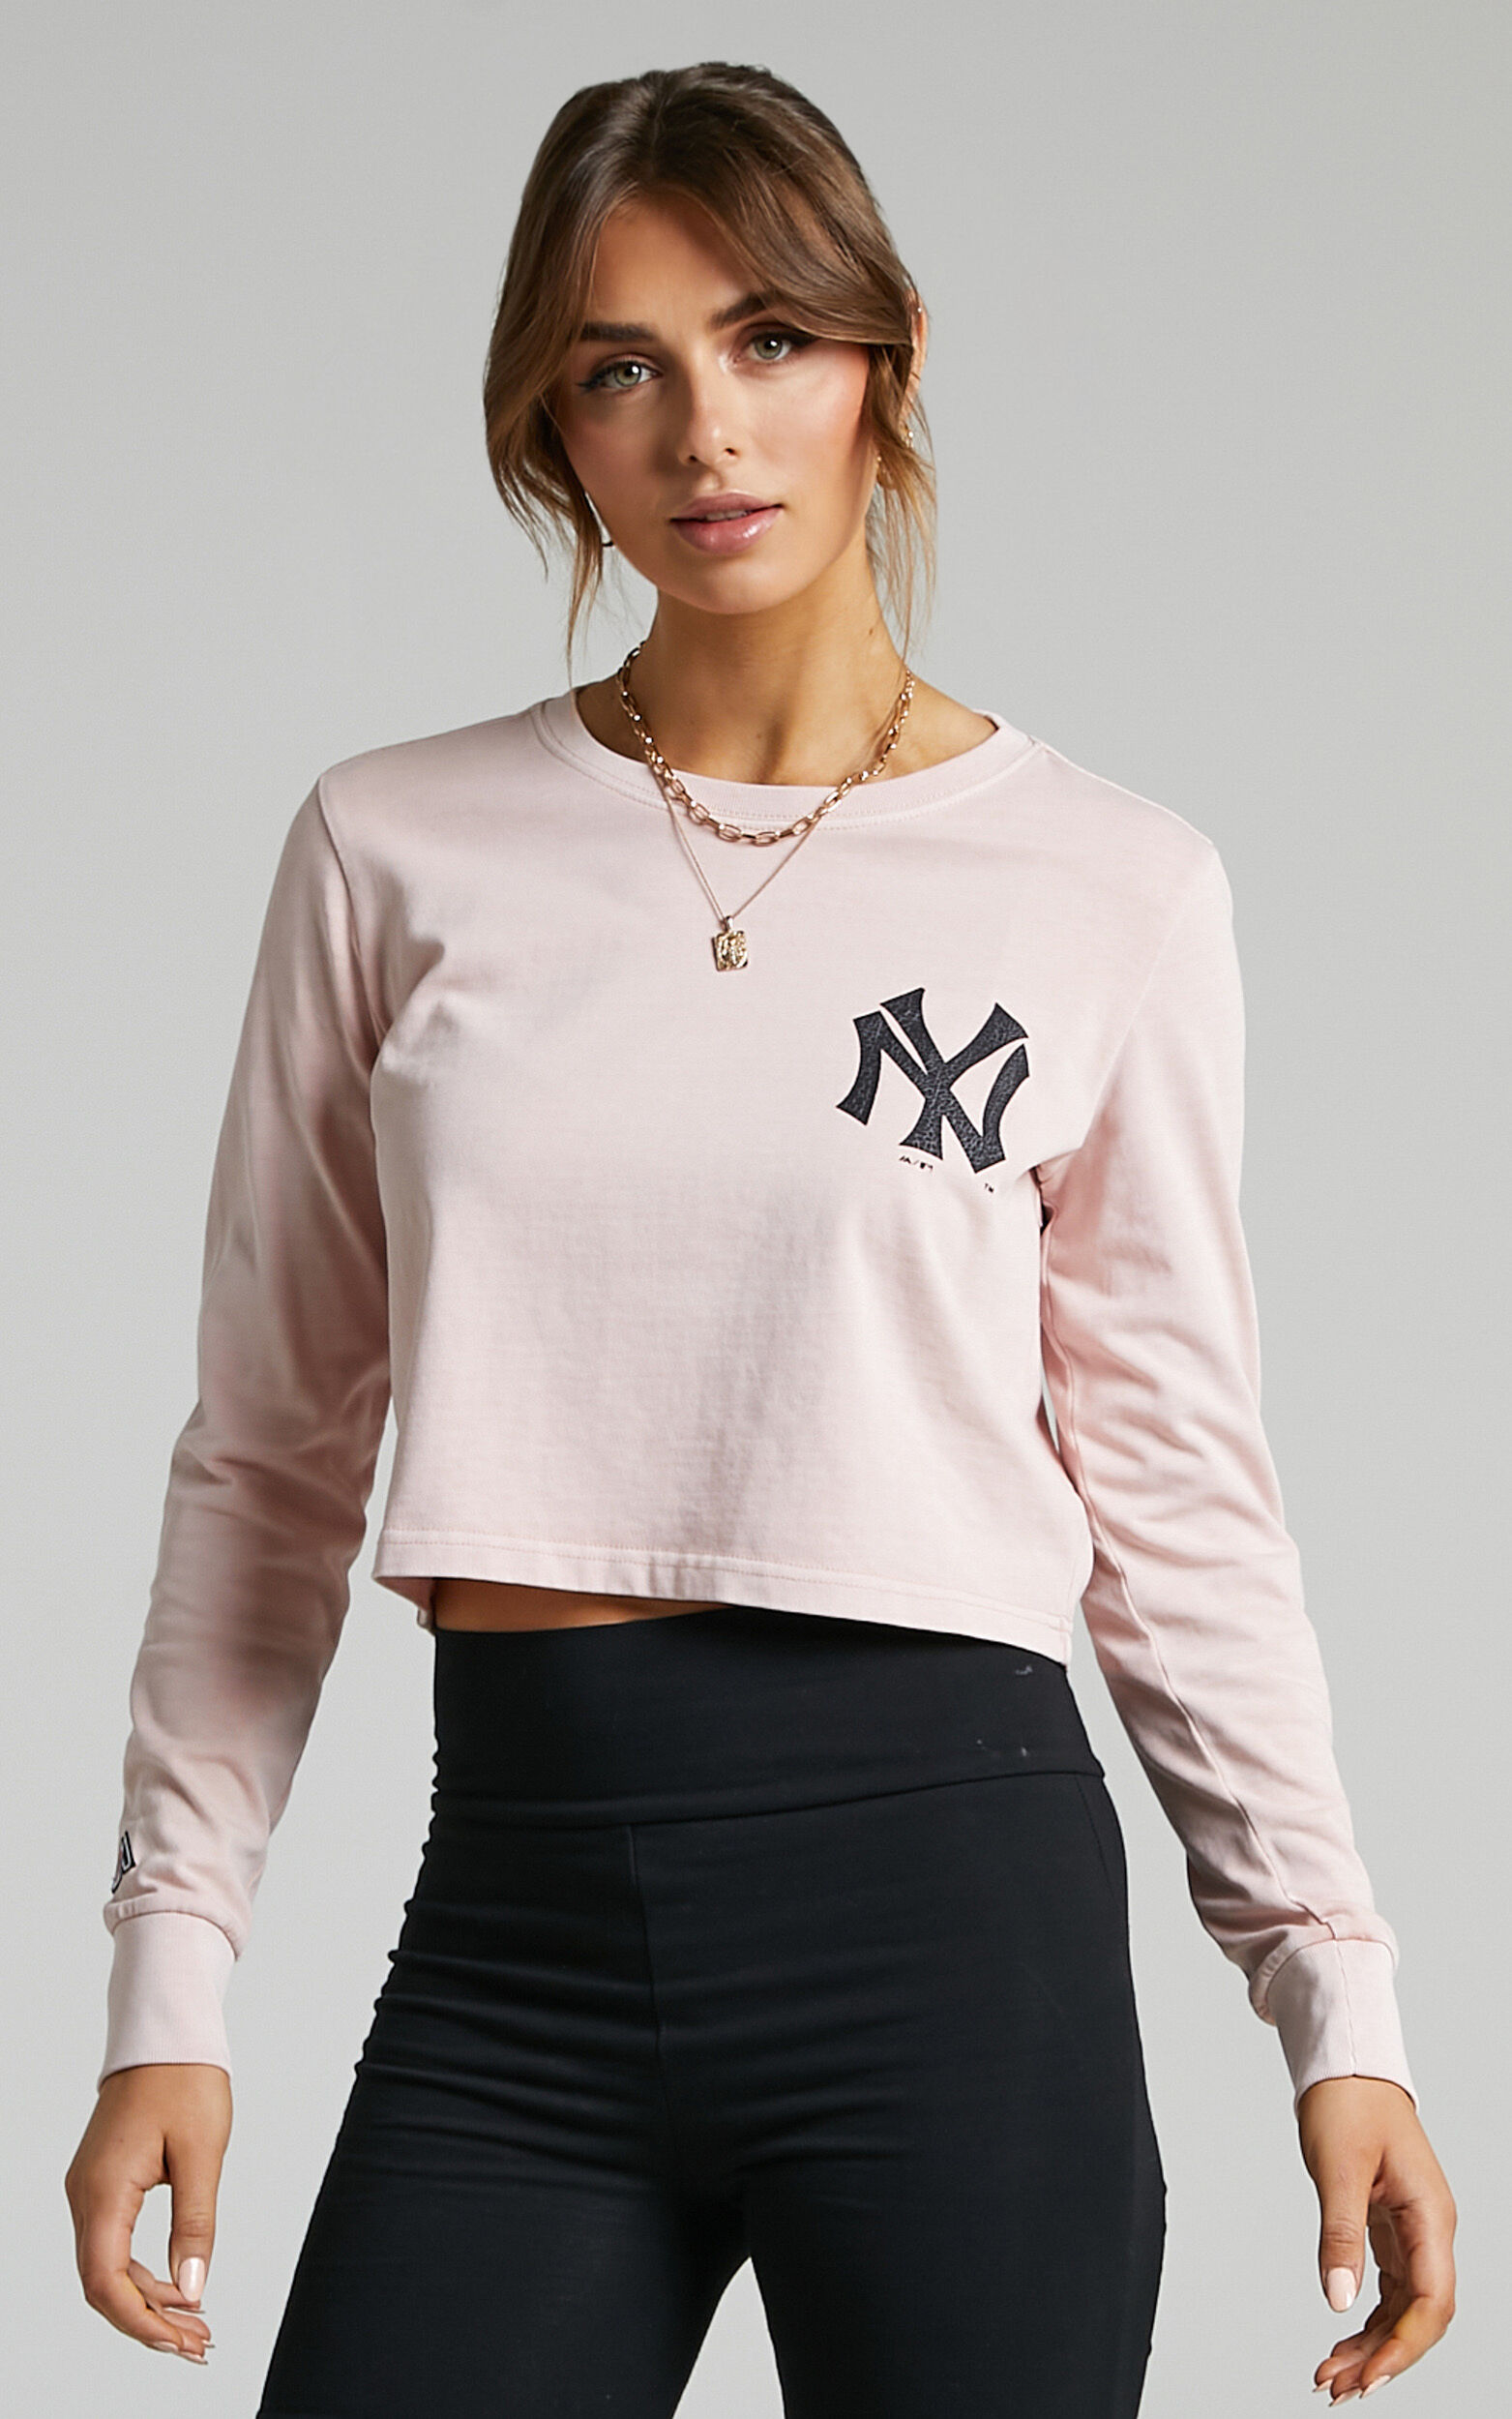 Yankees Vintage Womens Shirt